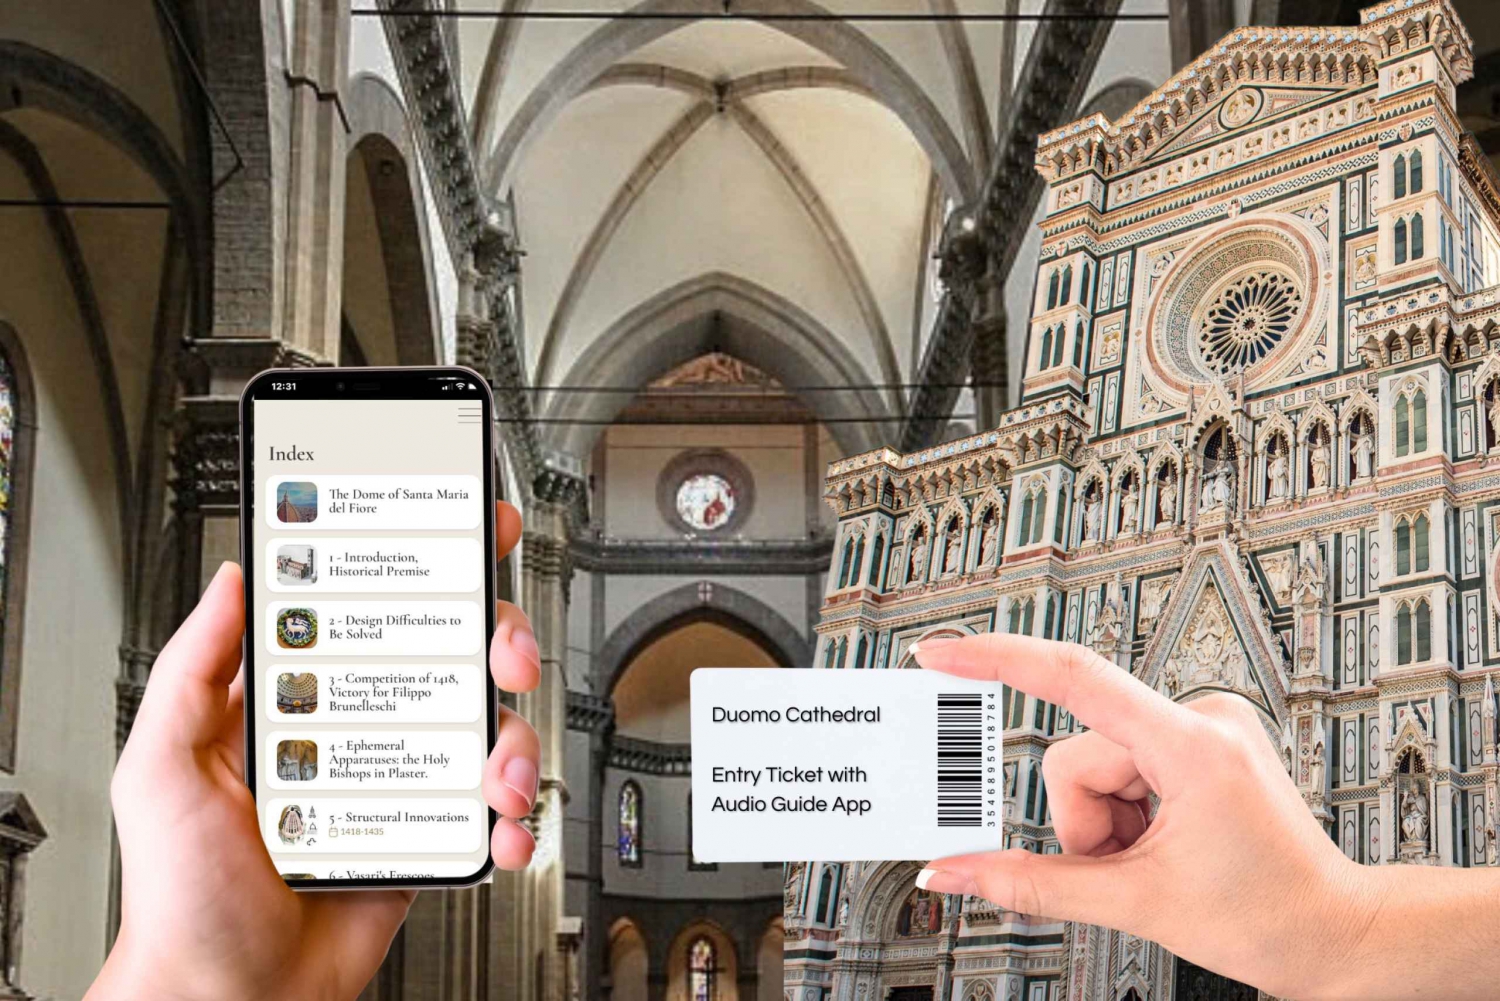 Florens: Baptisterium, Katedral, Museum Biljett & AudioApp